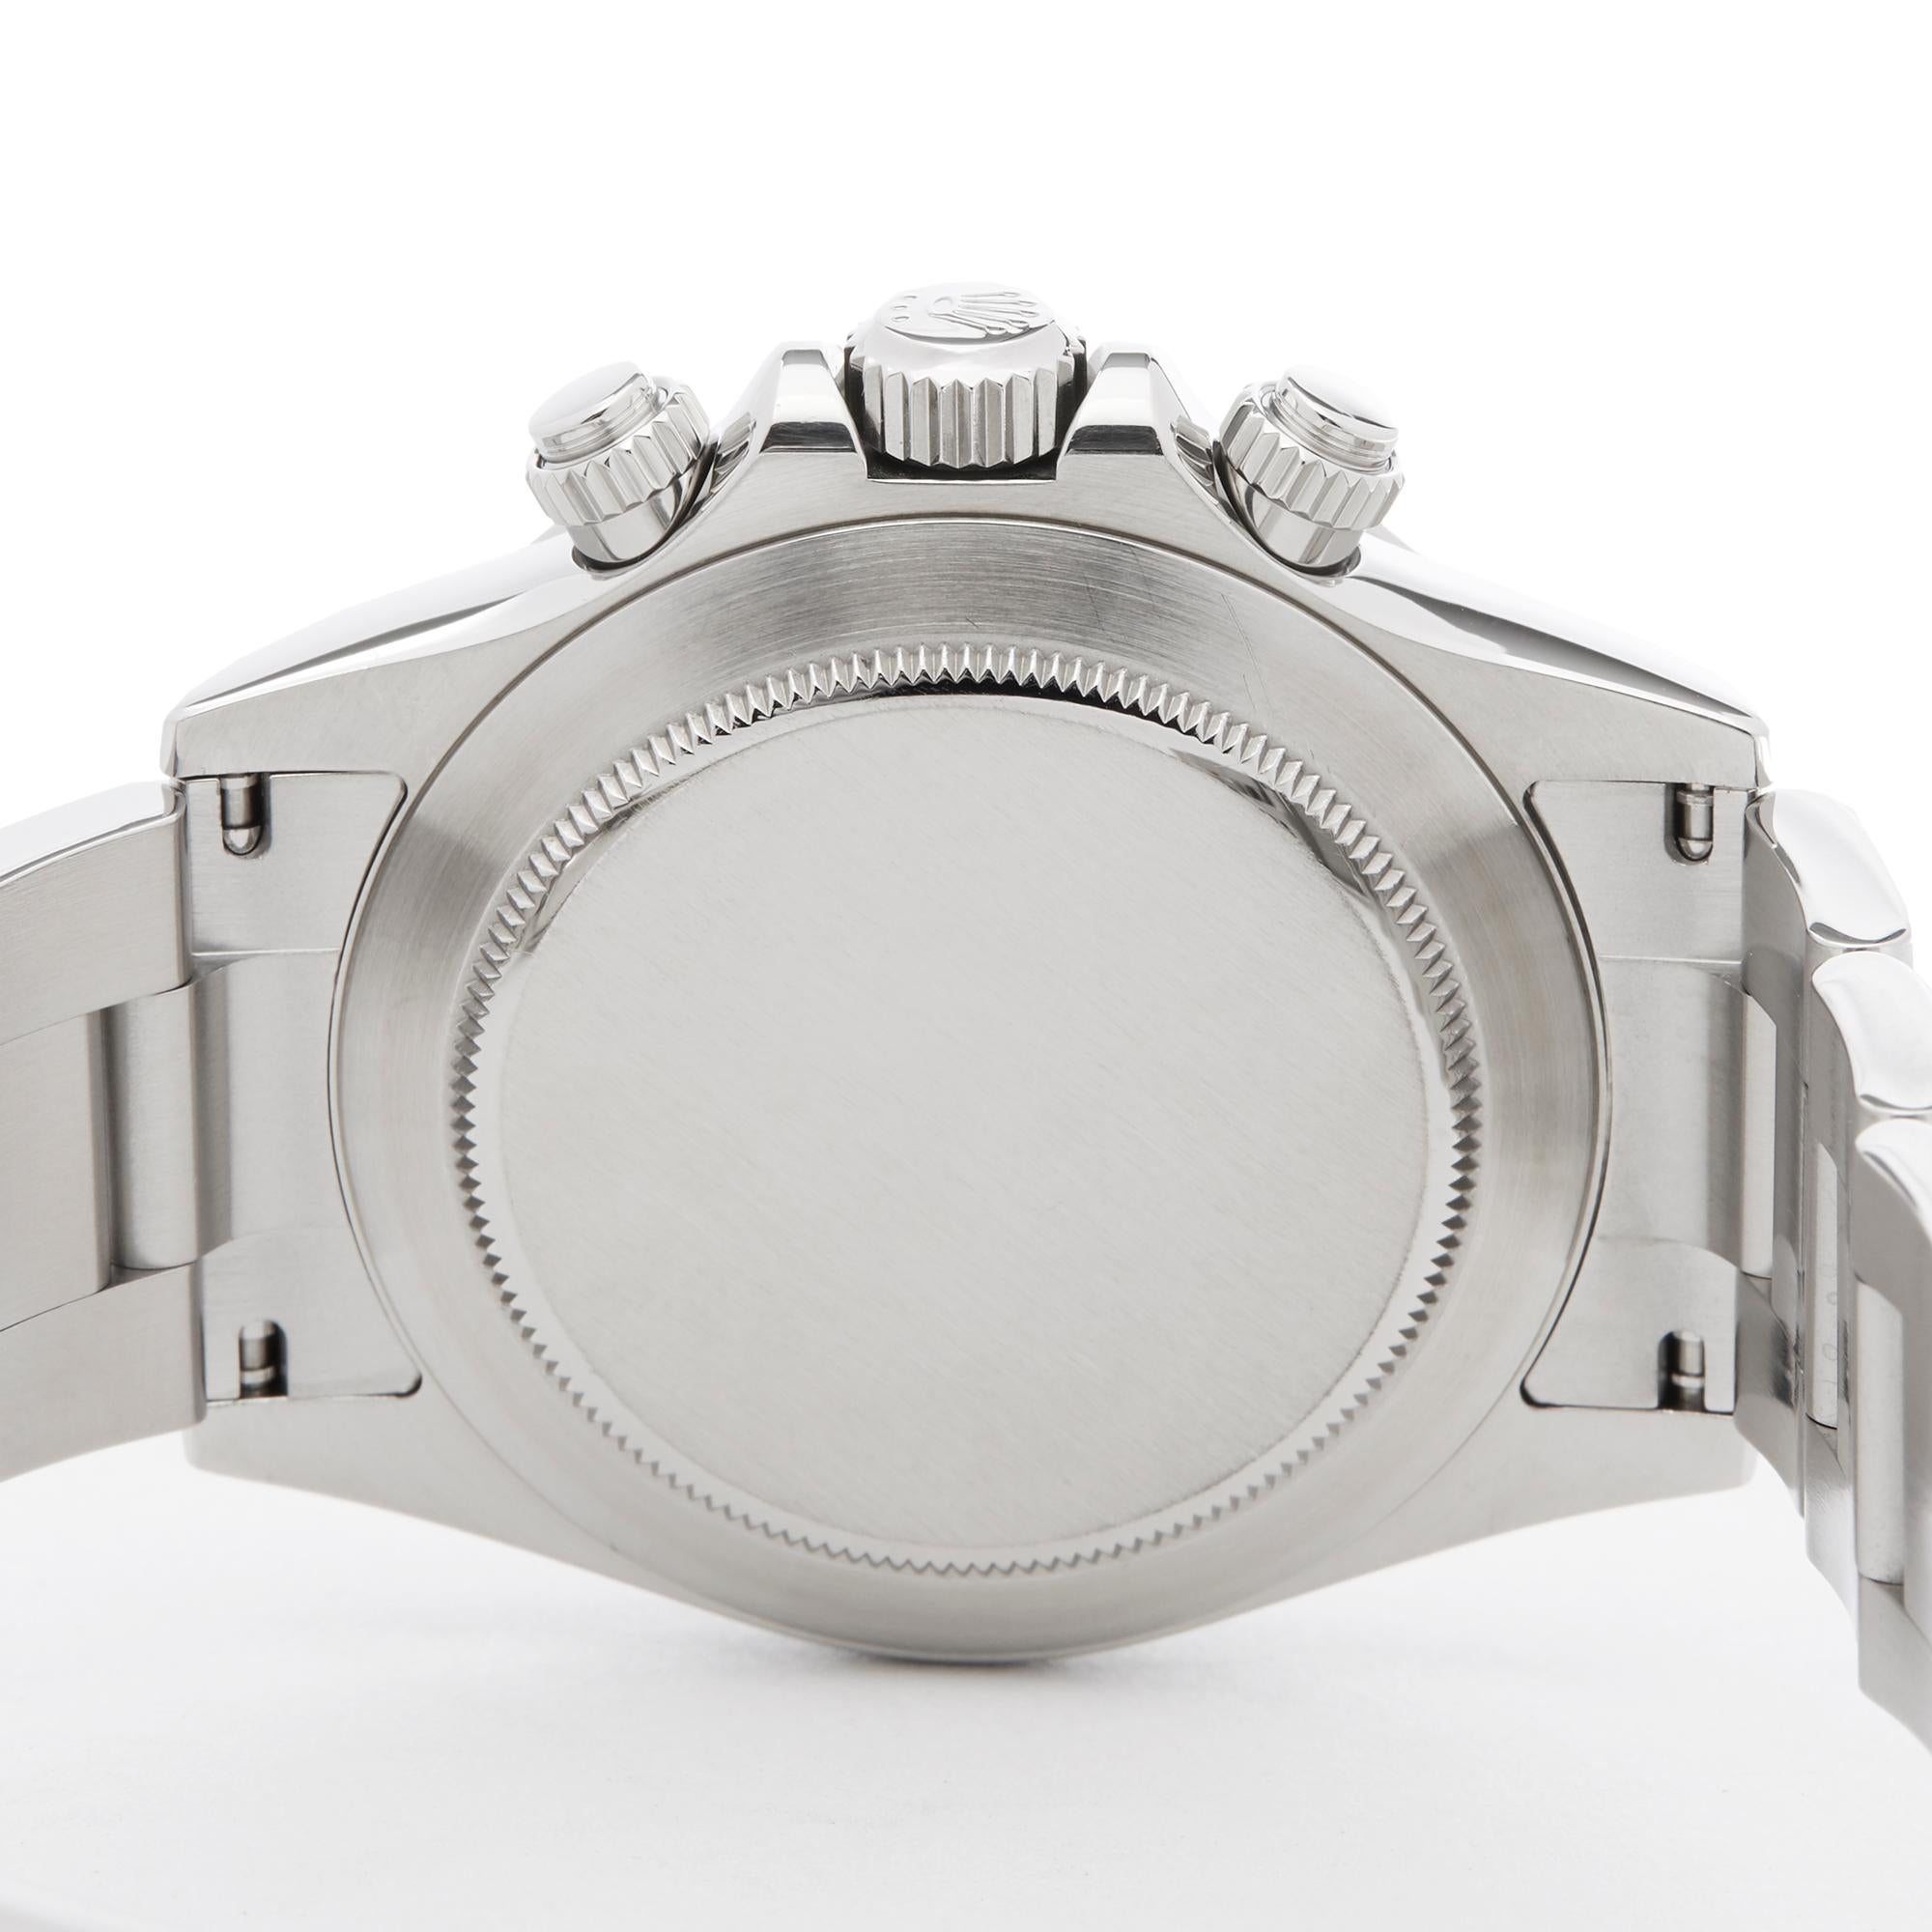 Rolex Daytona APH Dial Chronograph Stainless Steel 116520 Wristwatch 2